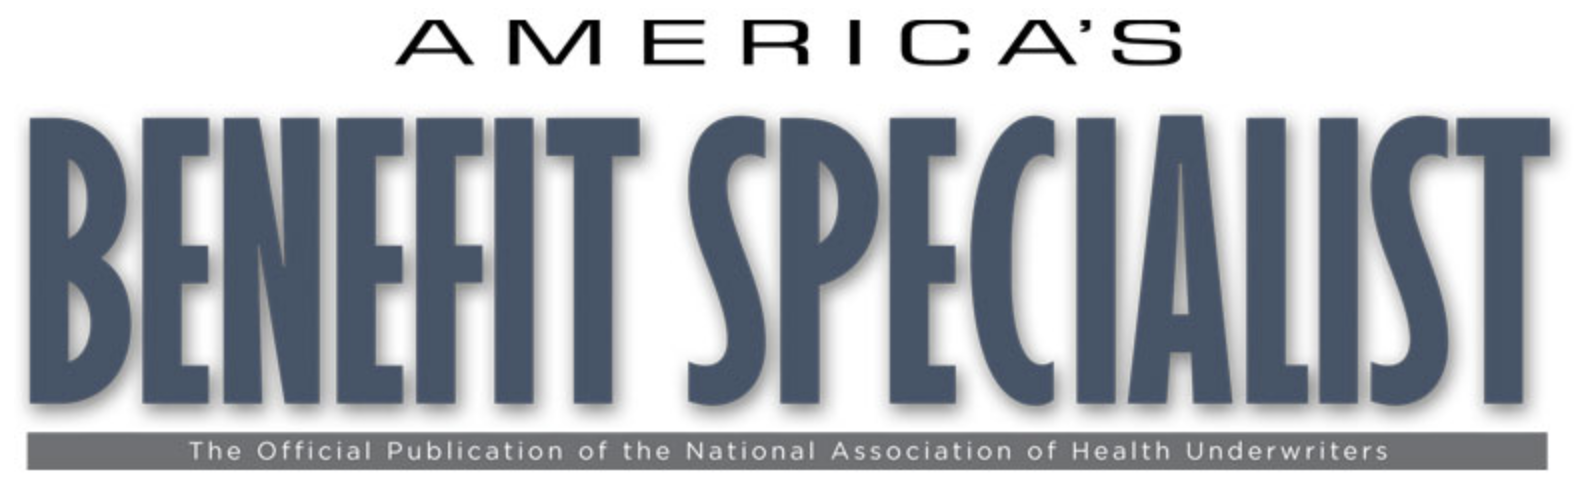 Americas Benefit Specialist logo